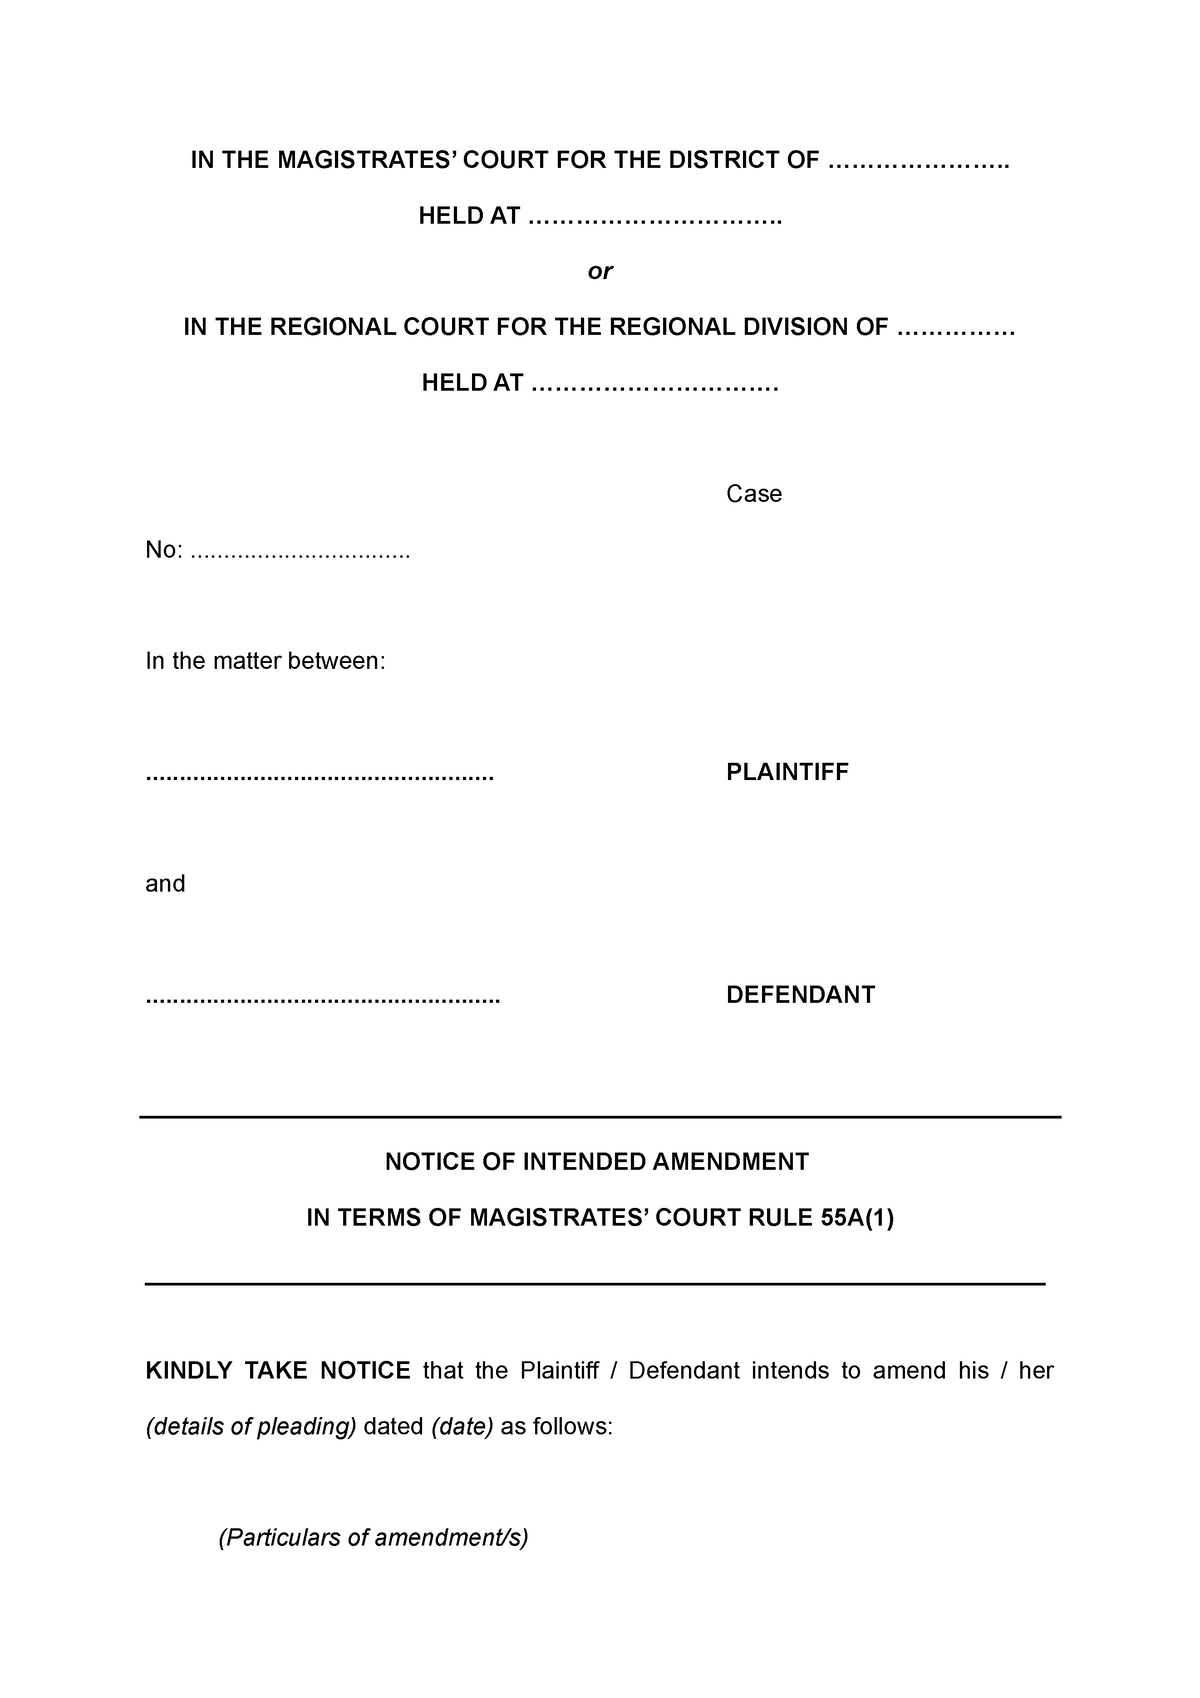 Amendment Of Pleadings Magistrates Court Magistrates Court Rule 55a In The Magistrates